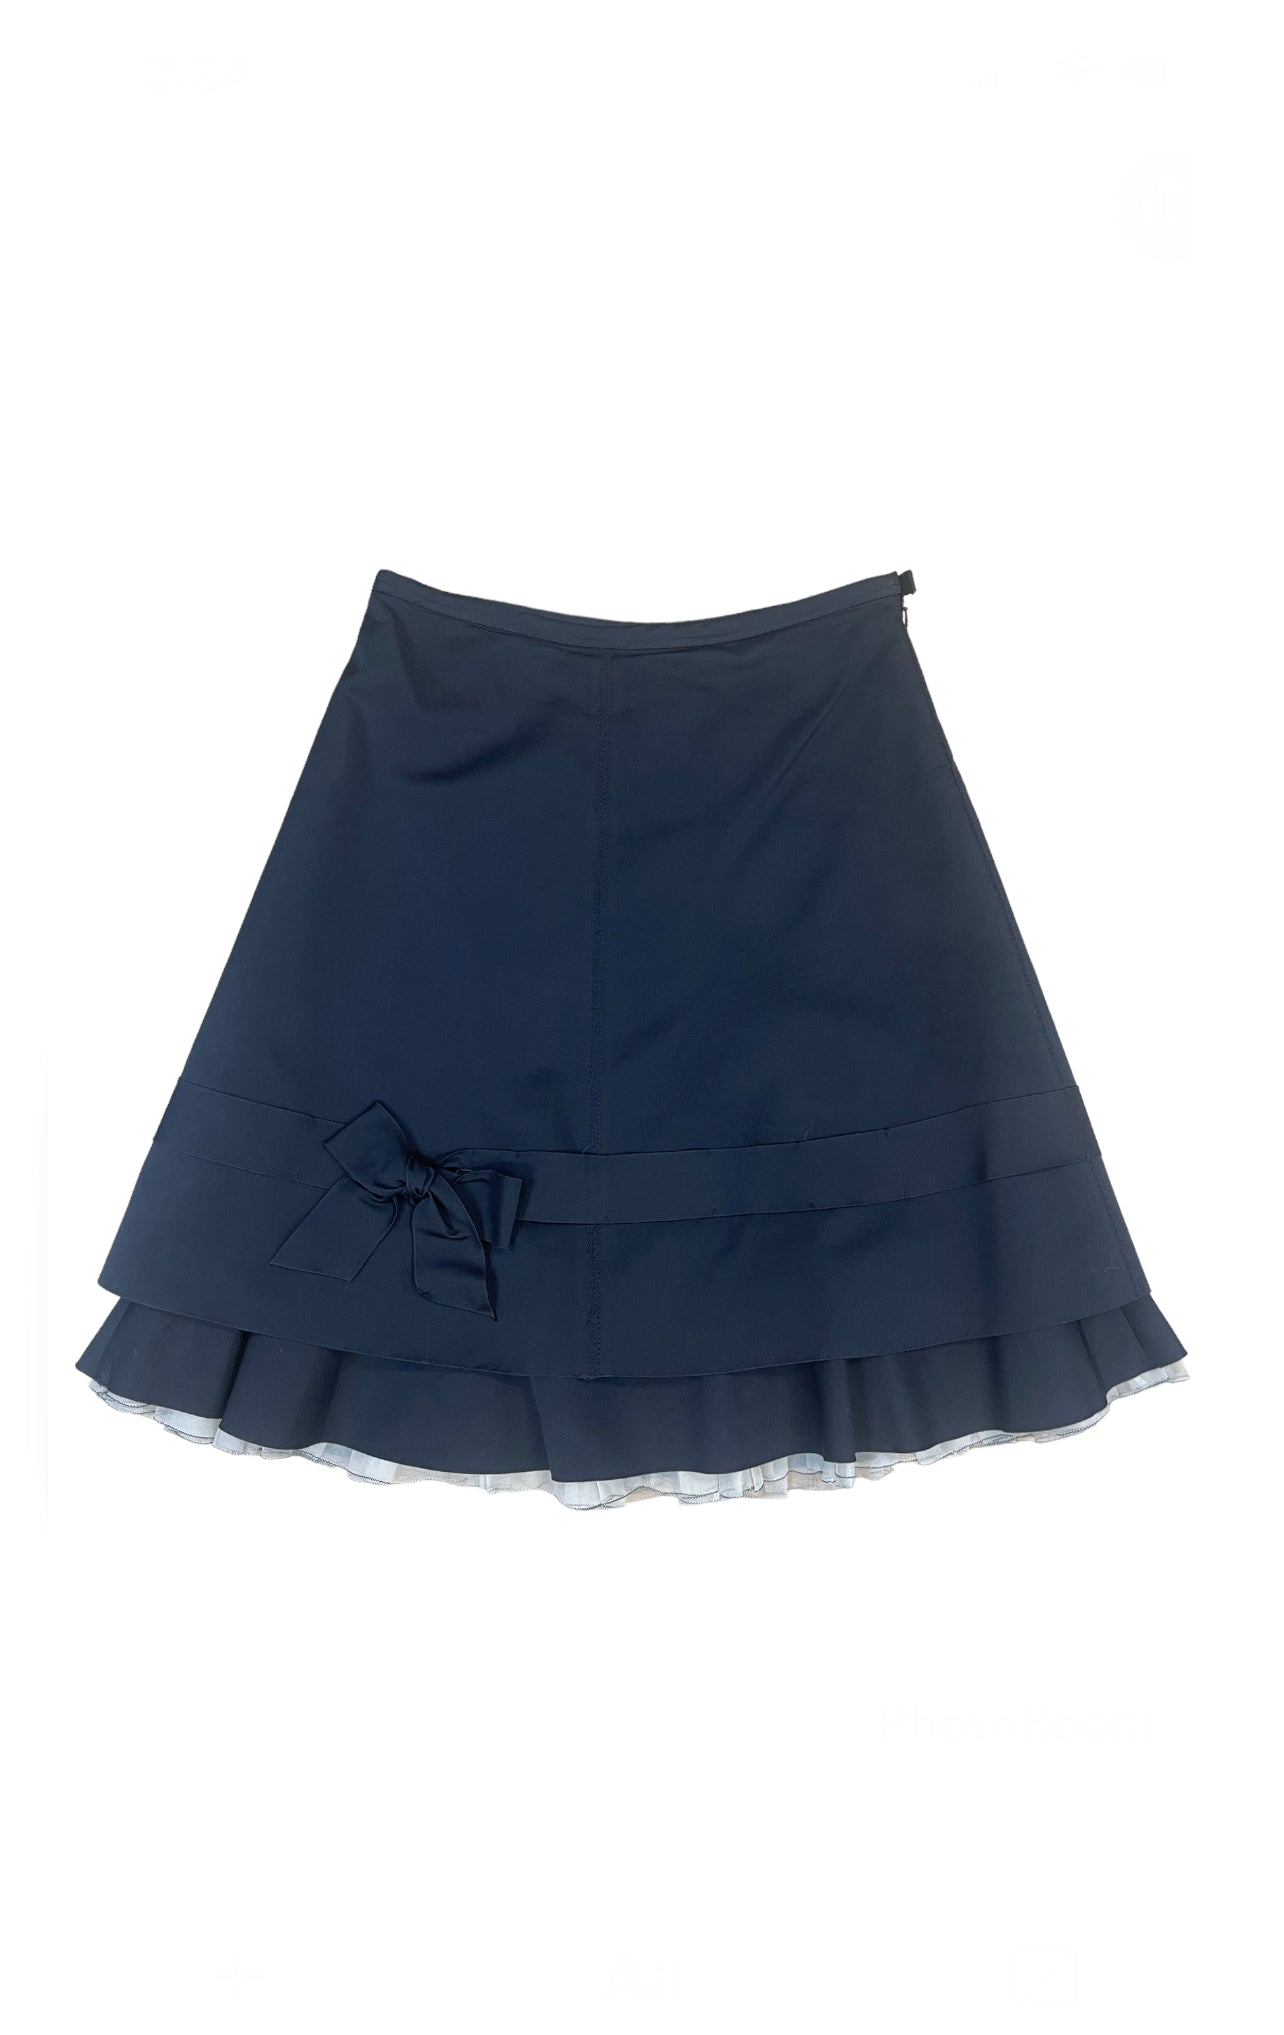 Vintage Prada Black Bow Skirt